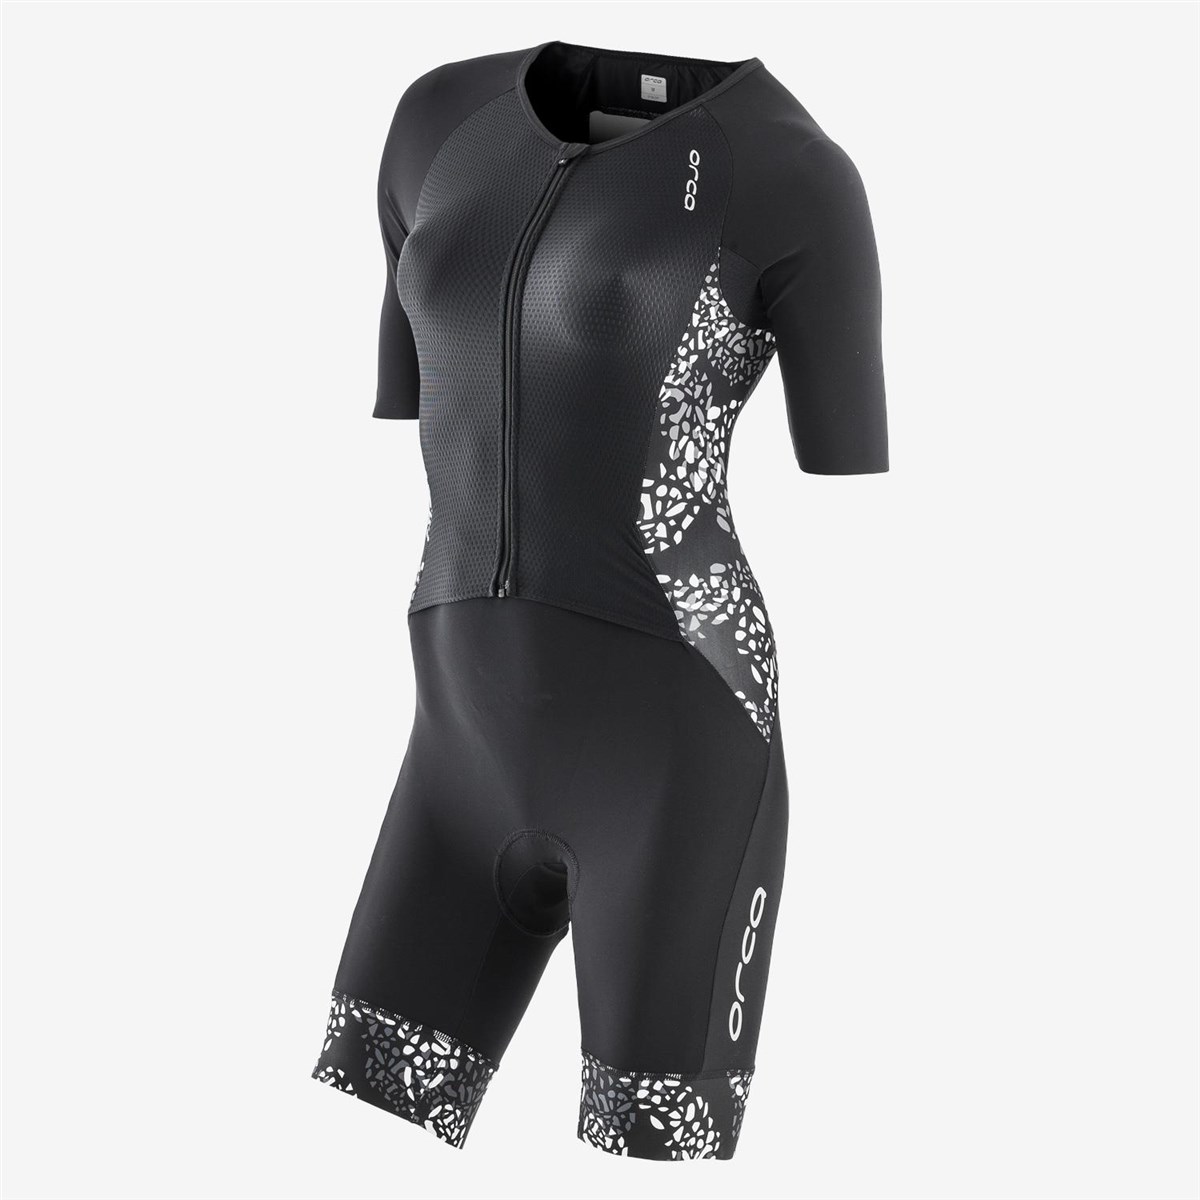 Orca 226 Womens Short Sleeve Triathlon Race Suit product image